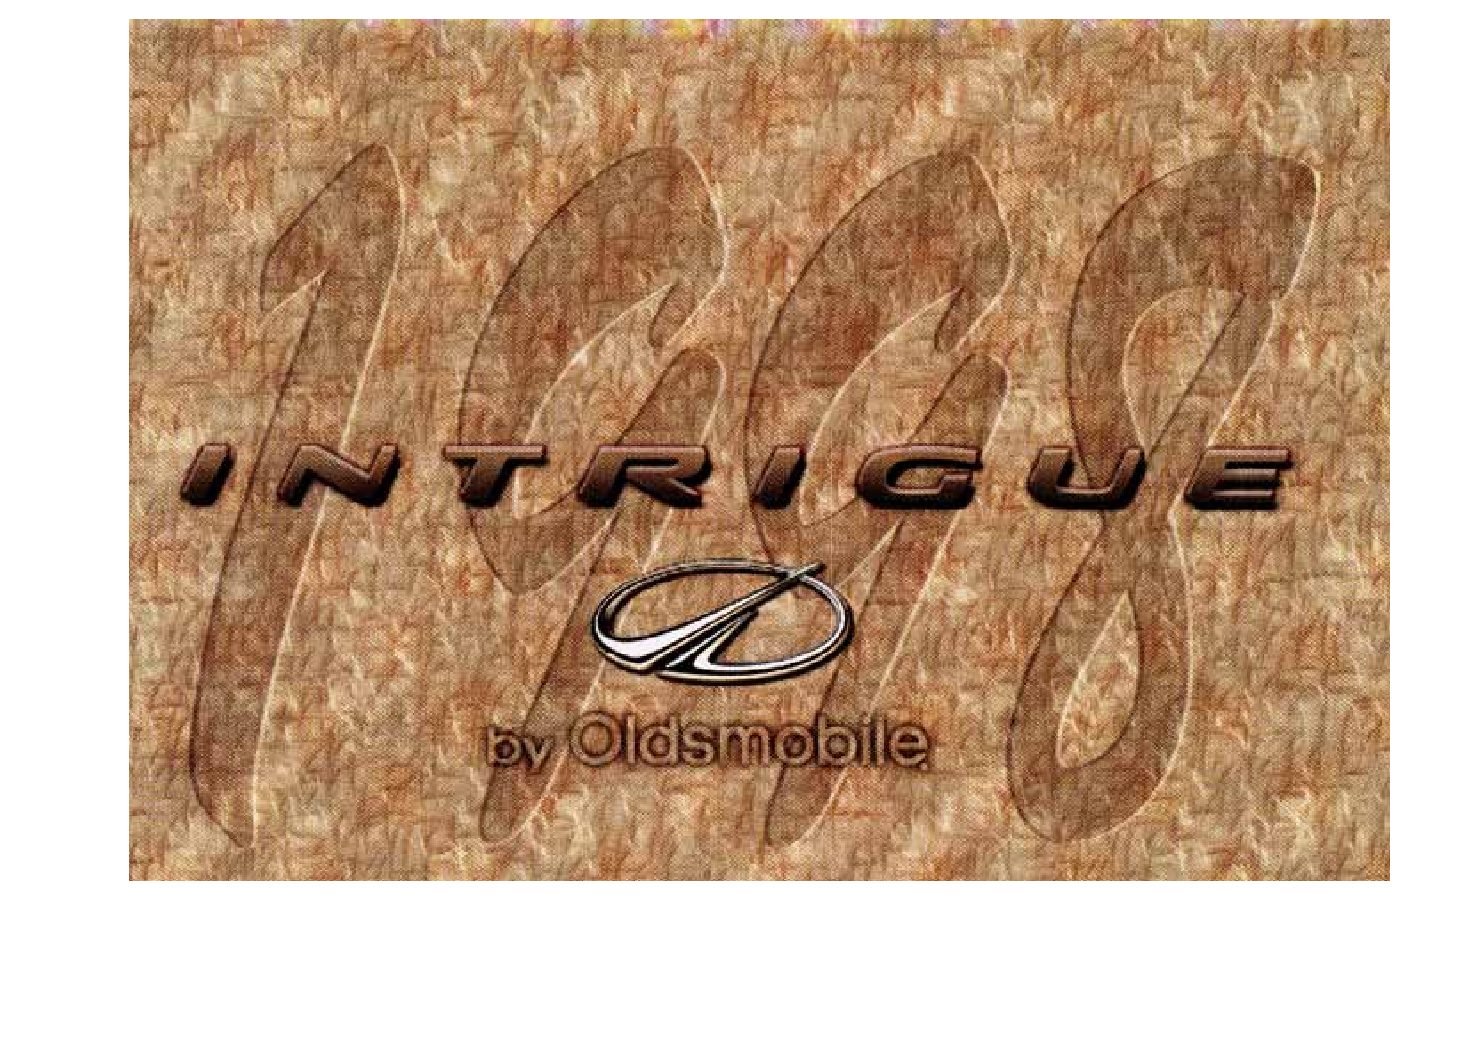 1998 Oldsmobile Intrigue Image